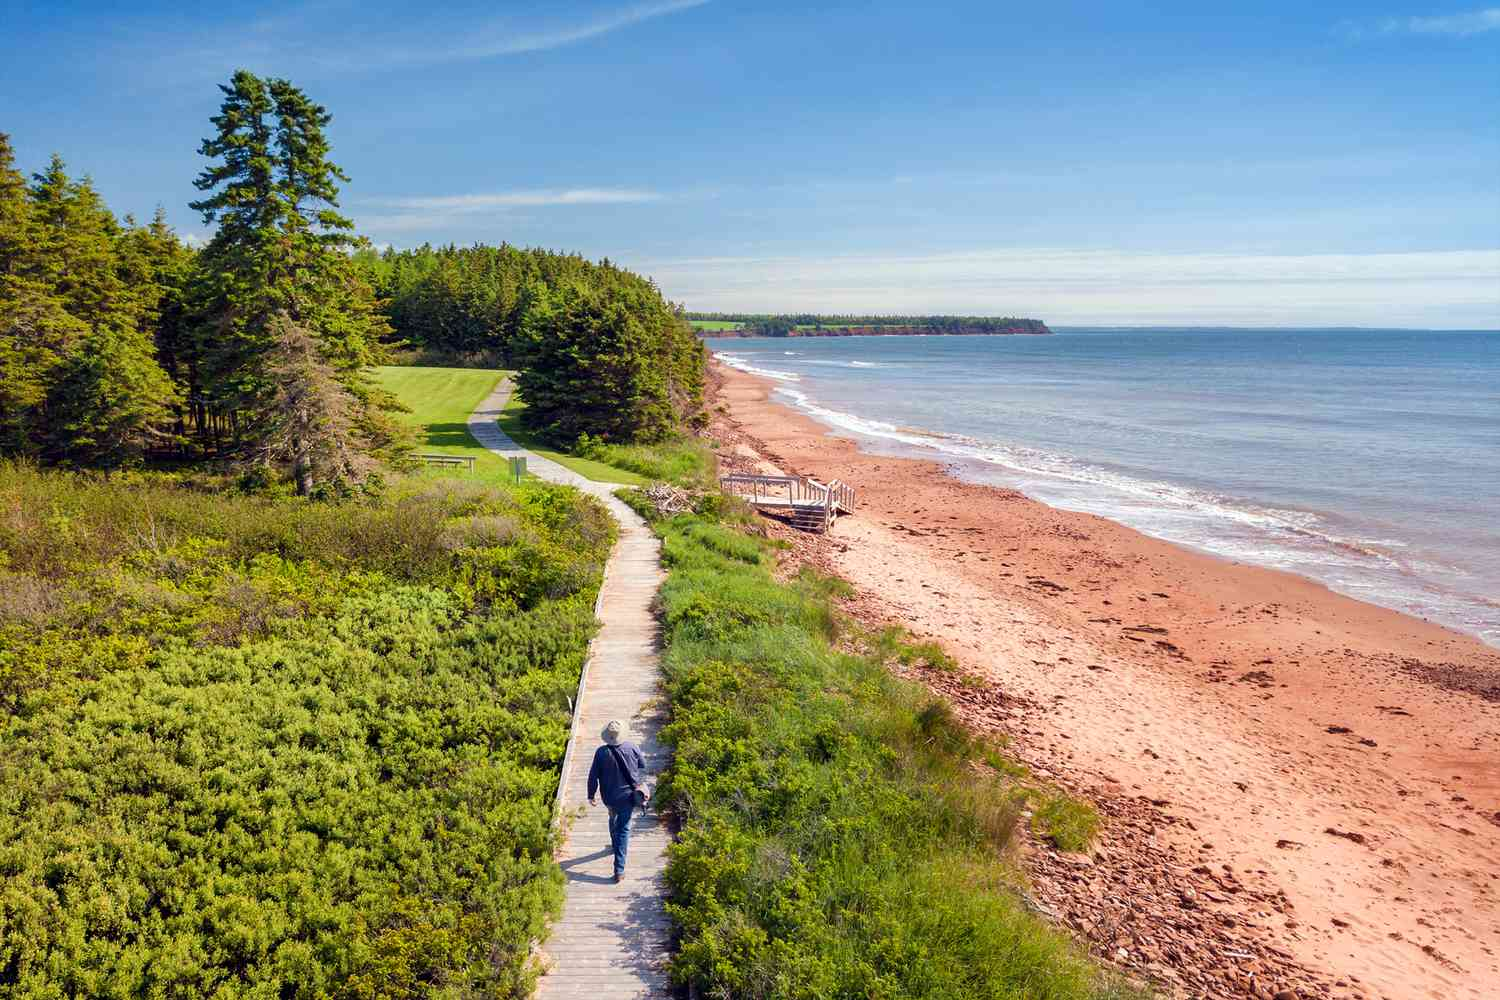 Prince Edward Island National Park whole host of beaches